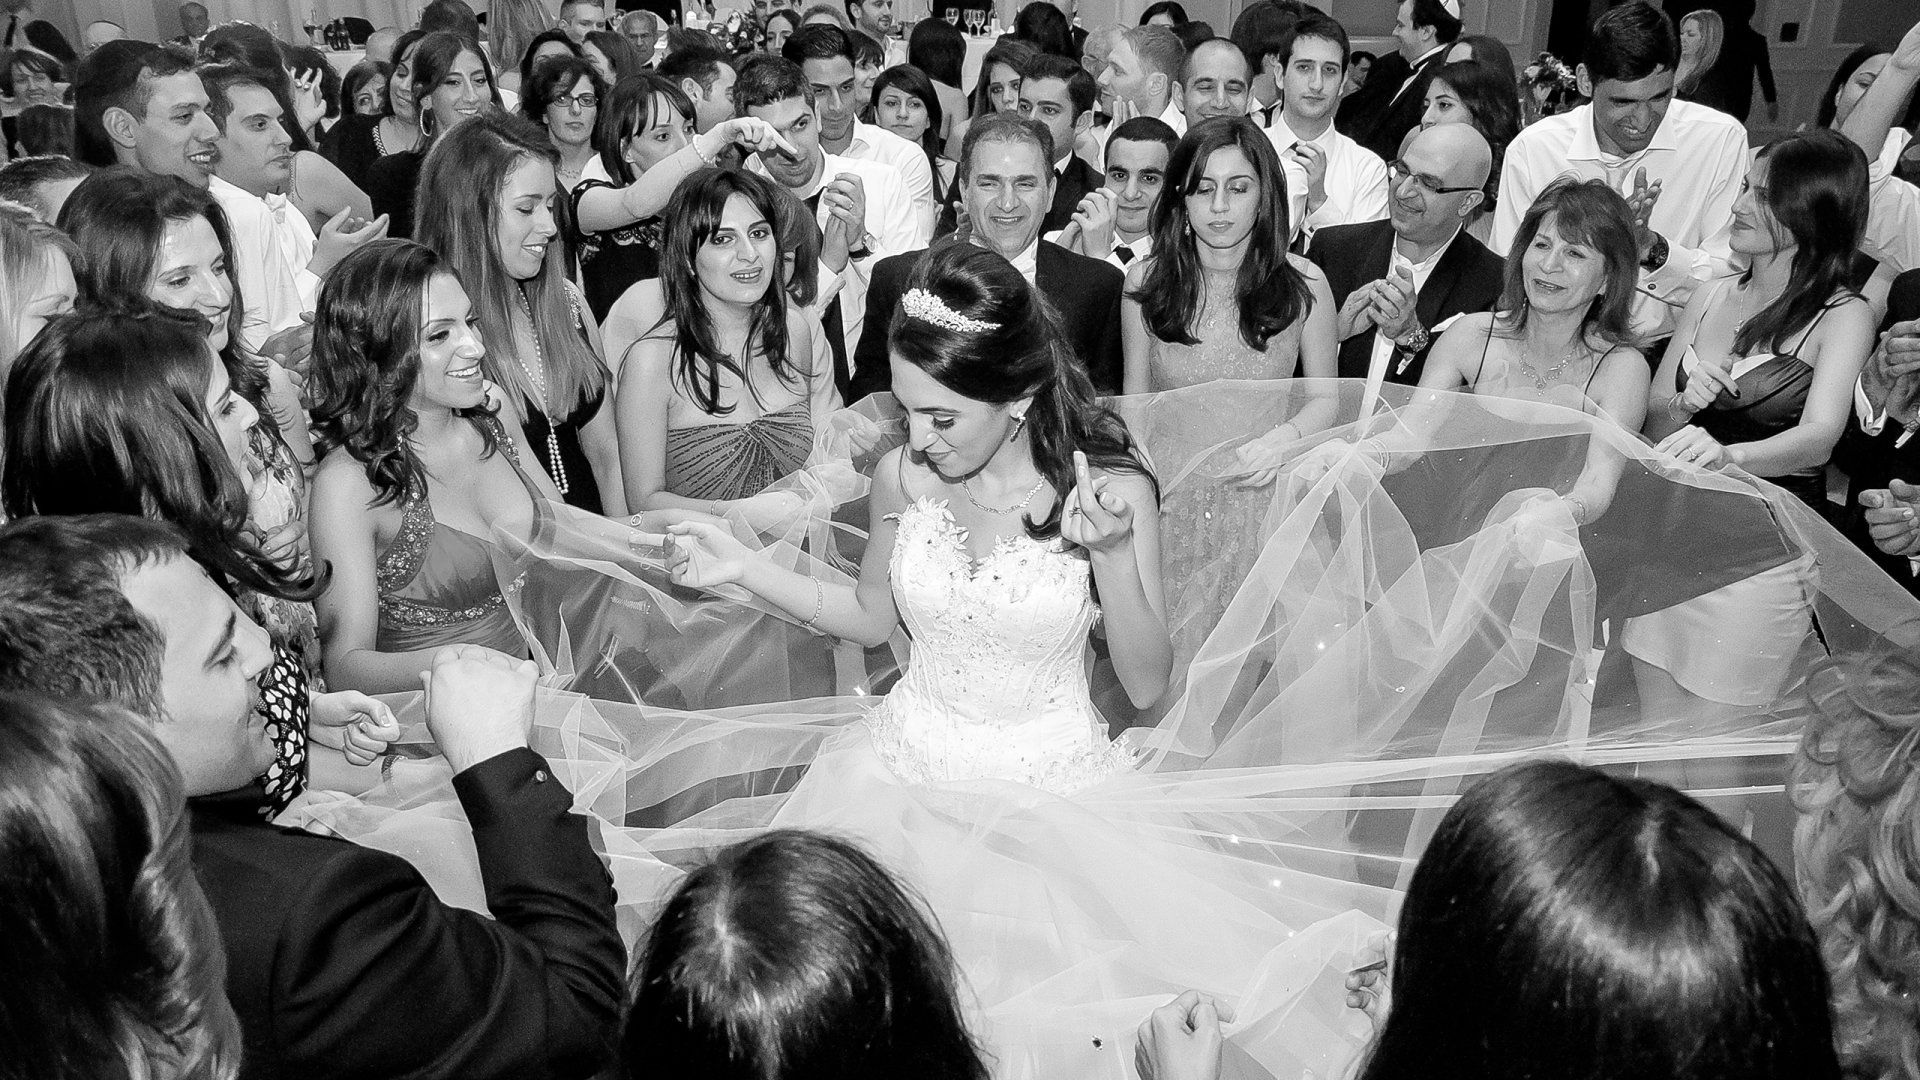 Jewish Sephardi custom to open the Brides dress on the dance floor